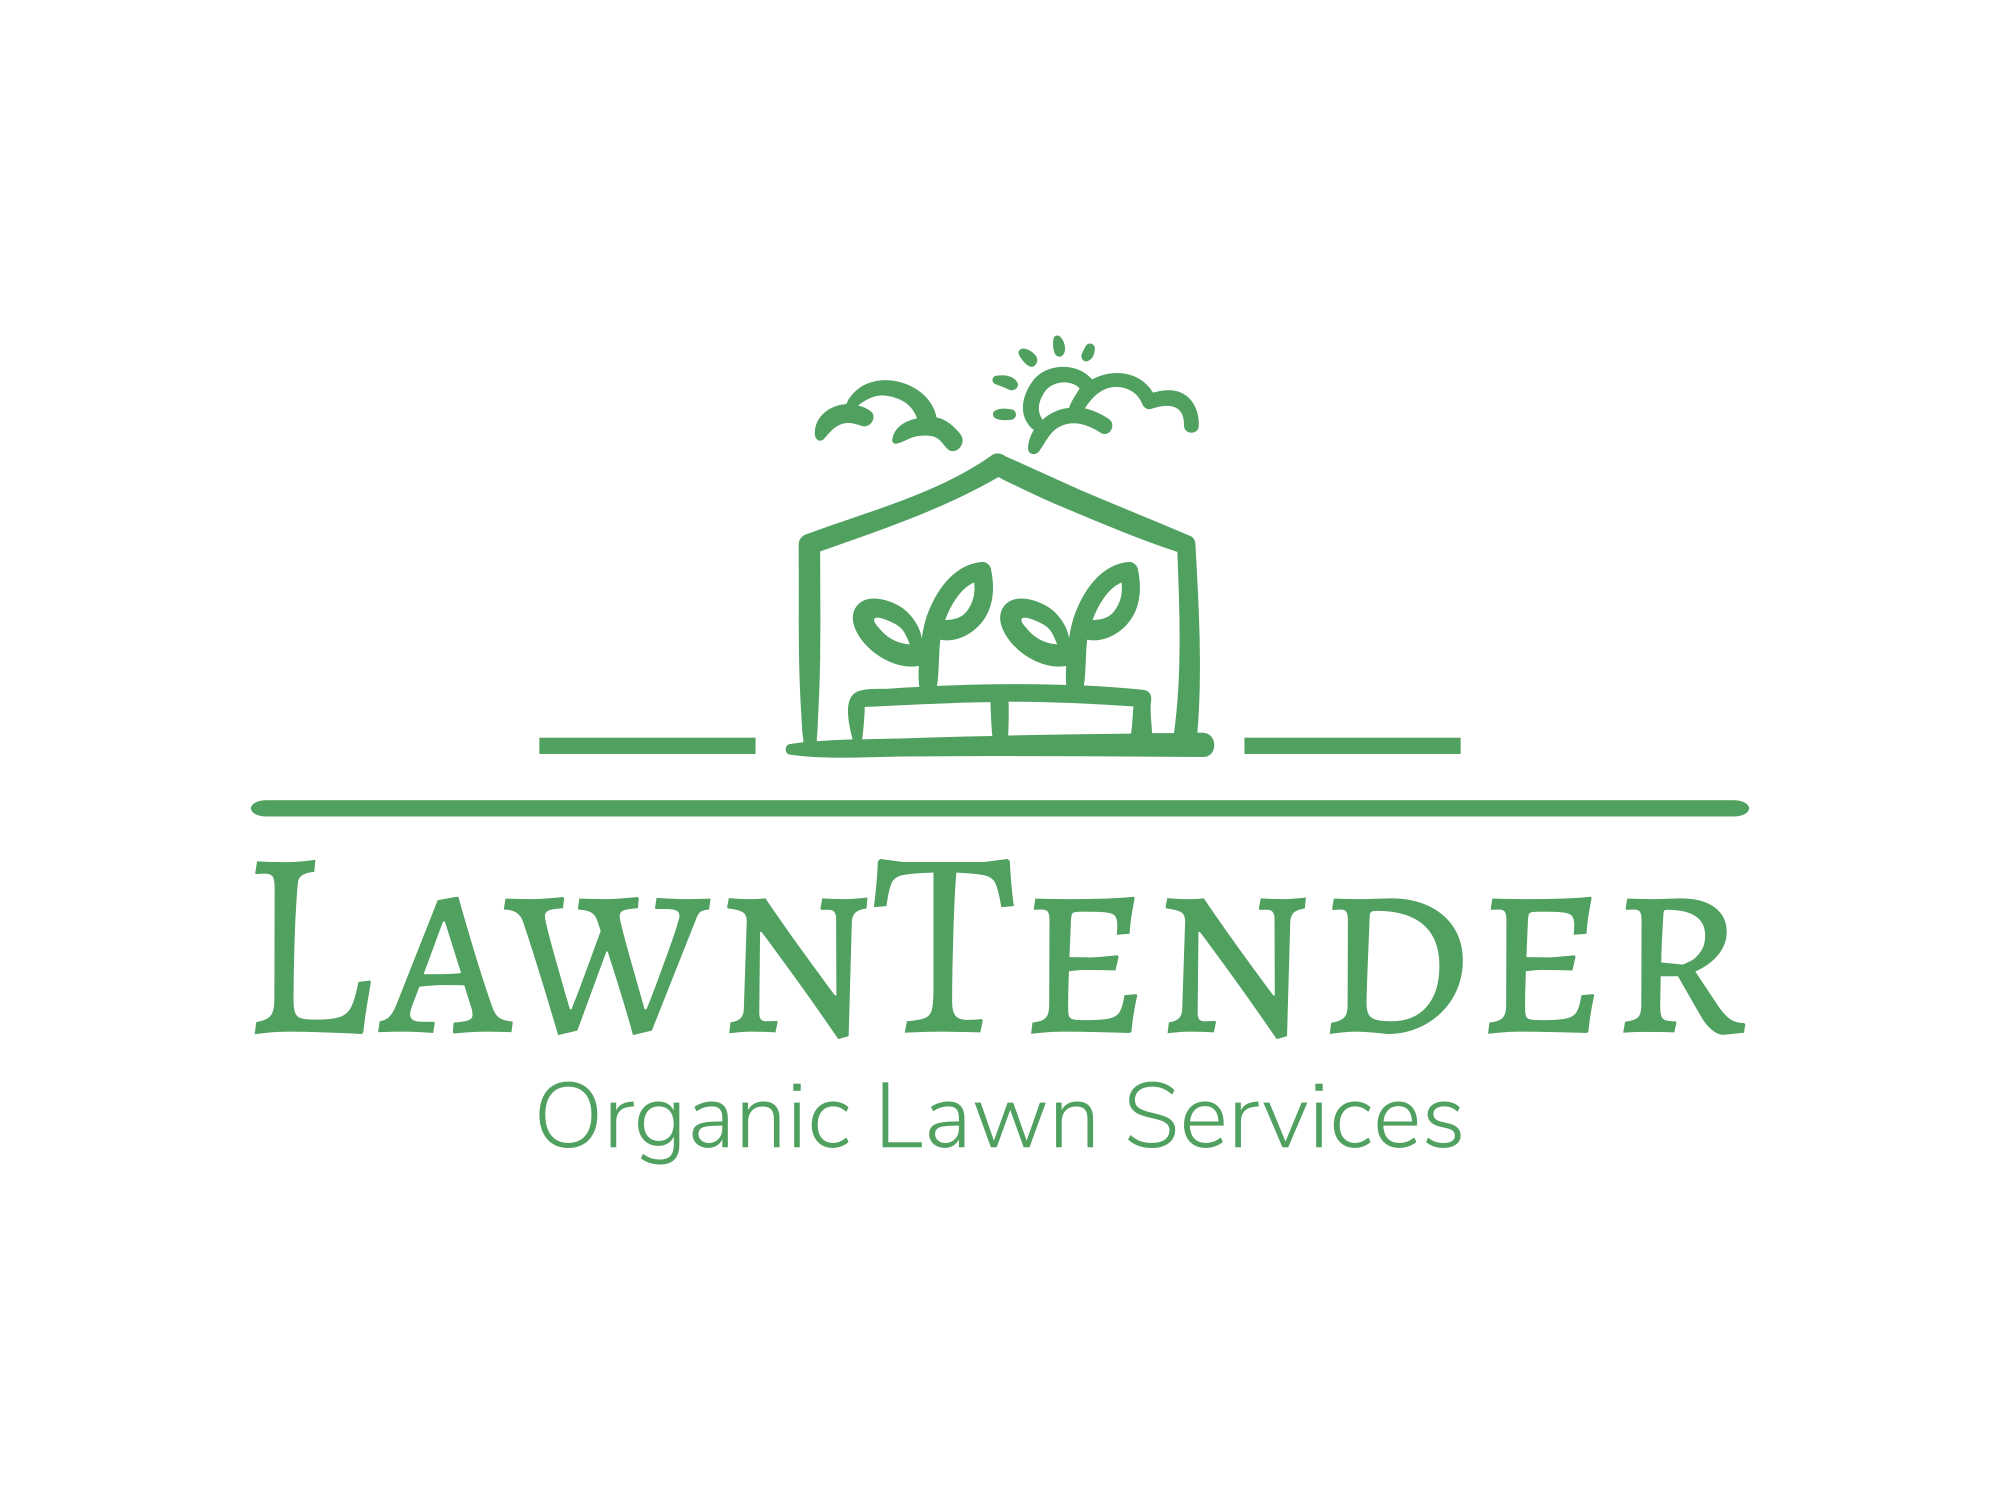 LawnTender - Organic Lawn Services Logo